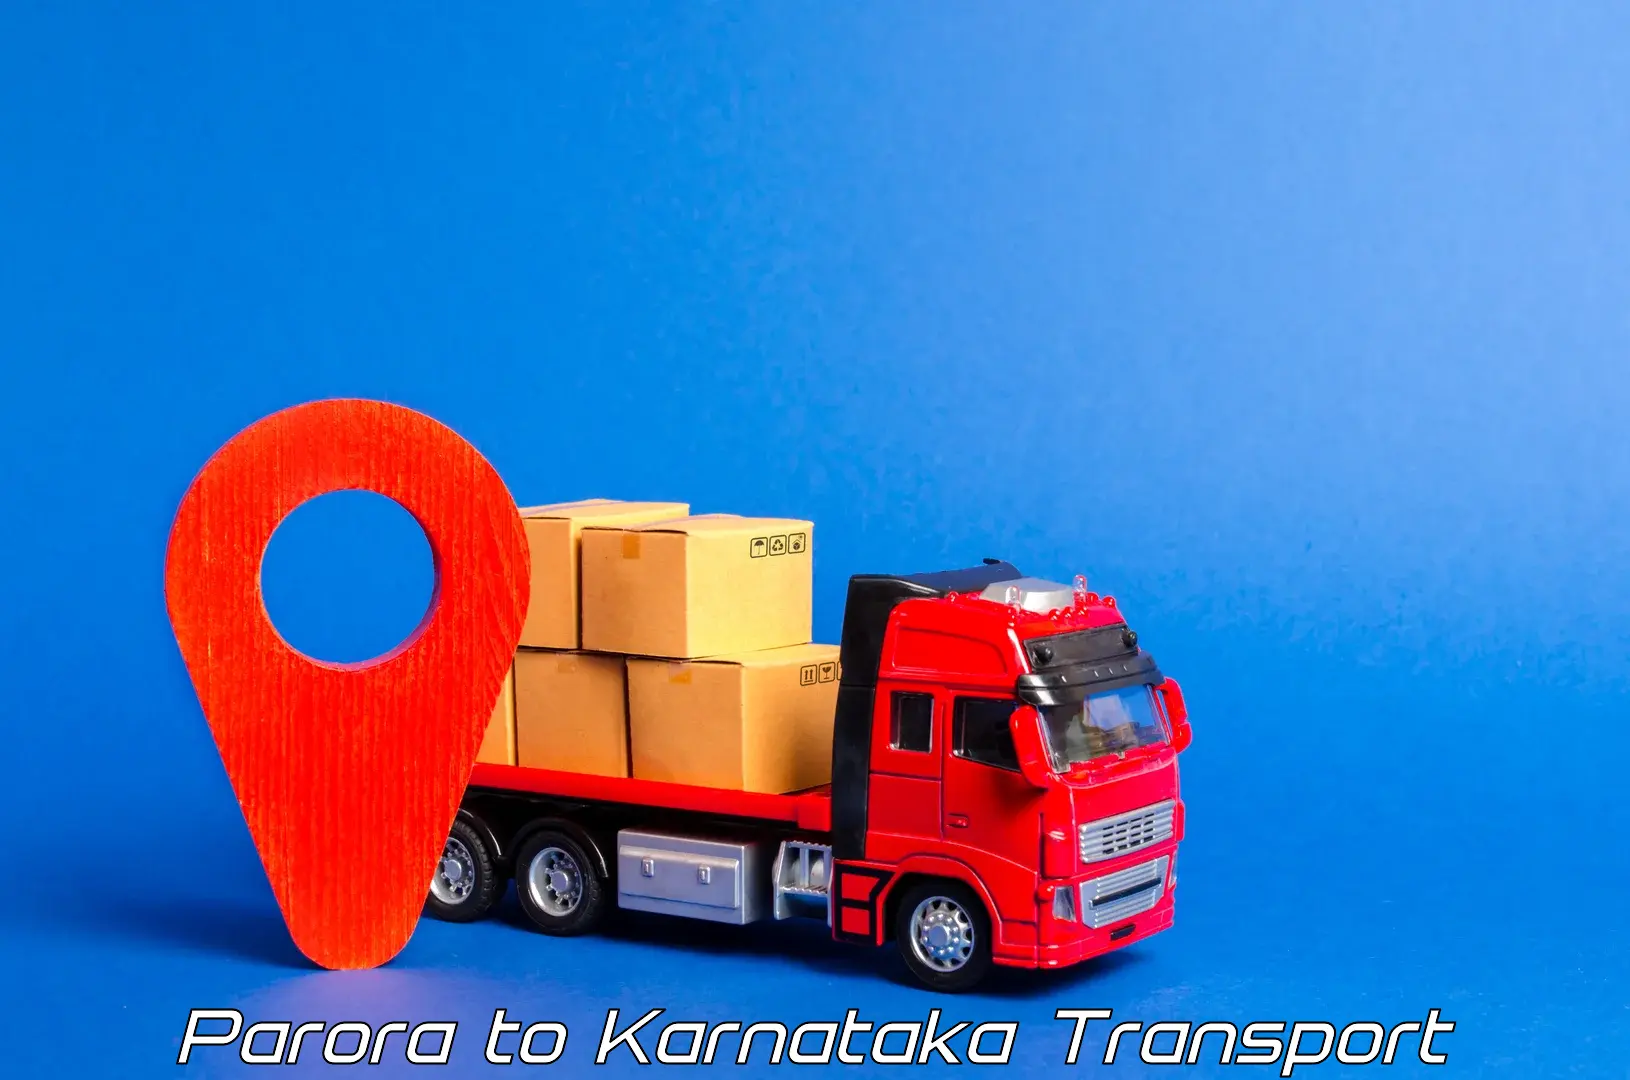 Online transport service Parora to Karnataka